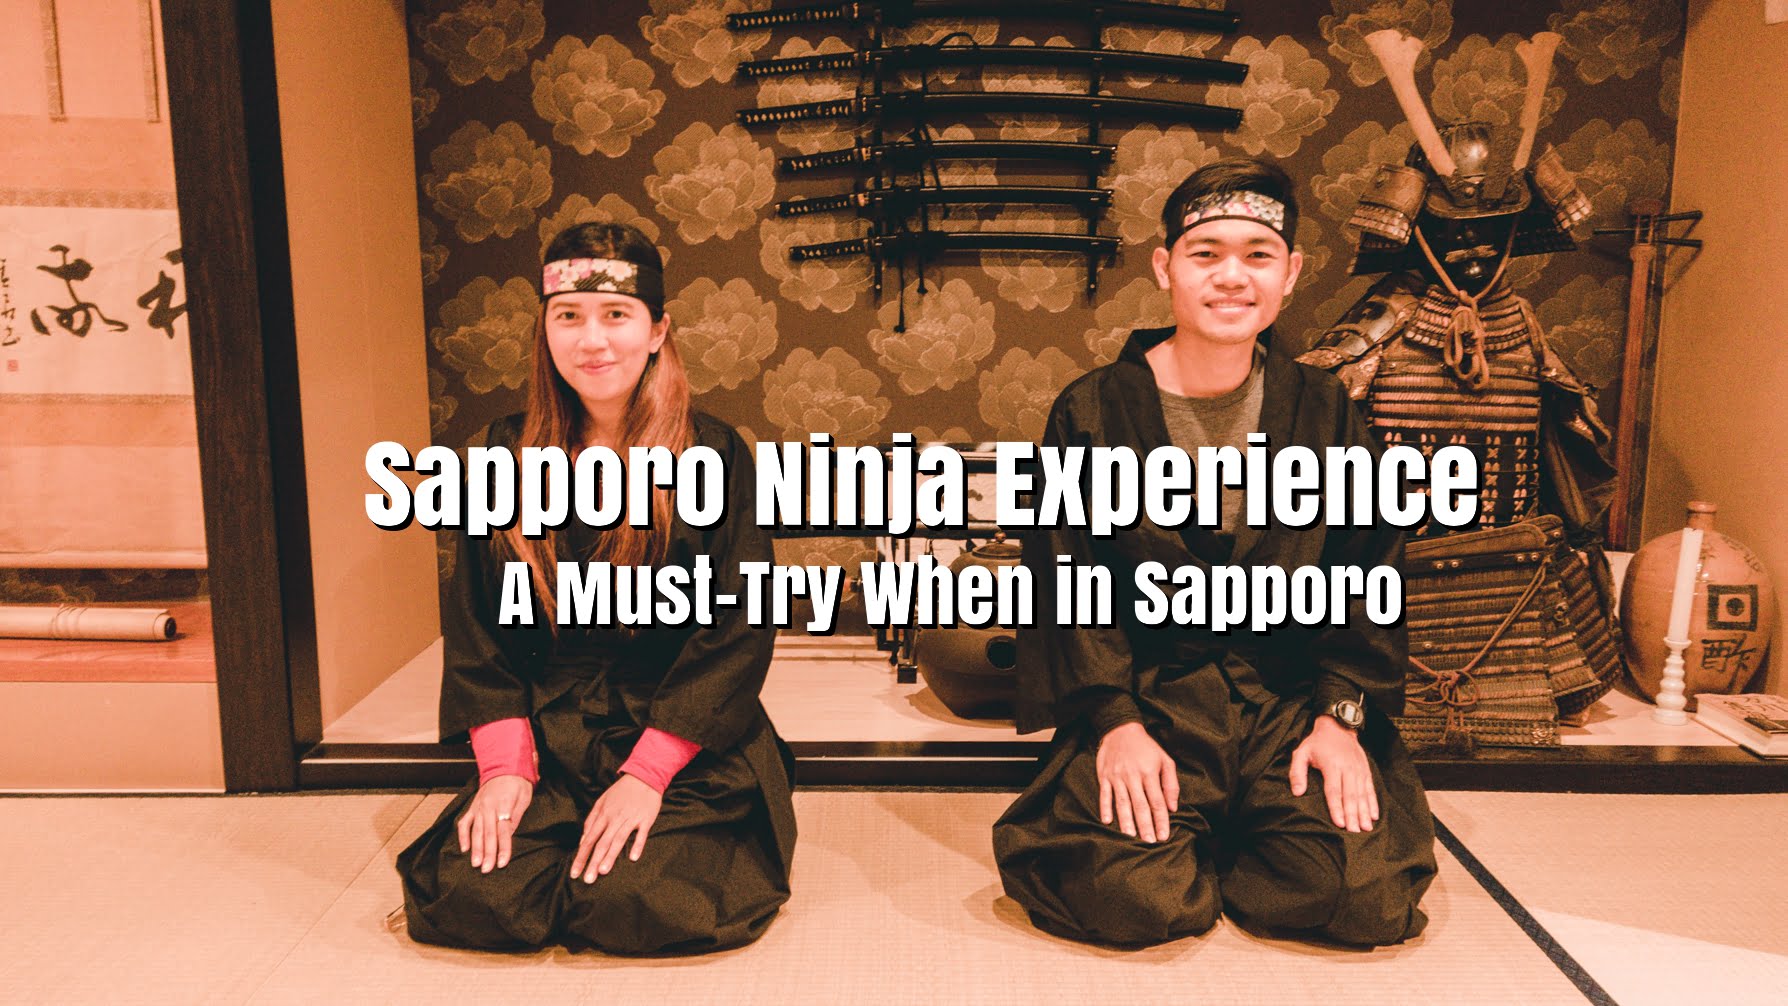 Sapporo Ninja Experience via KKday: Must-try Activity When in Sapporo